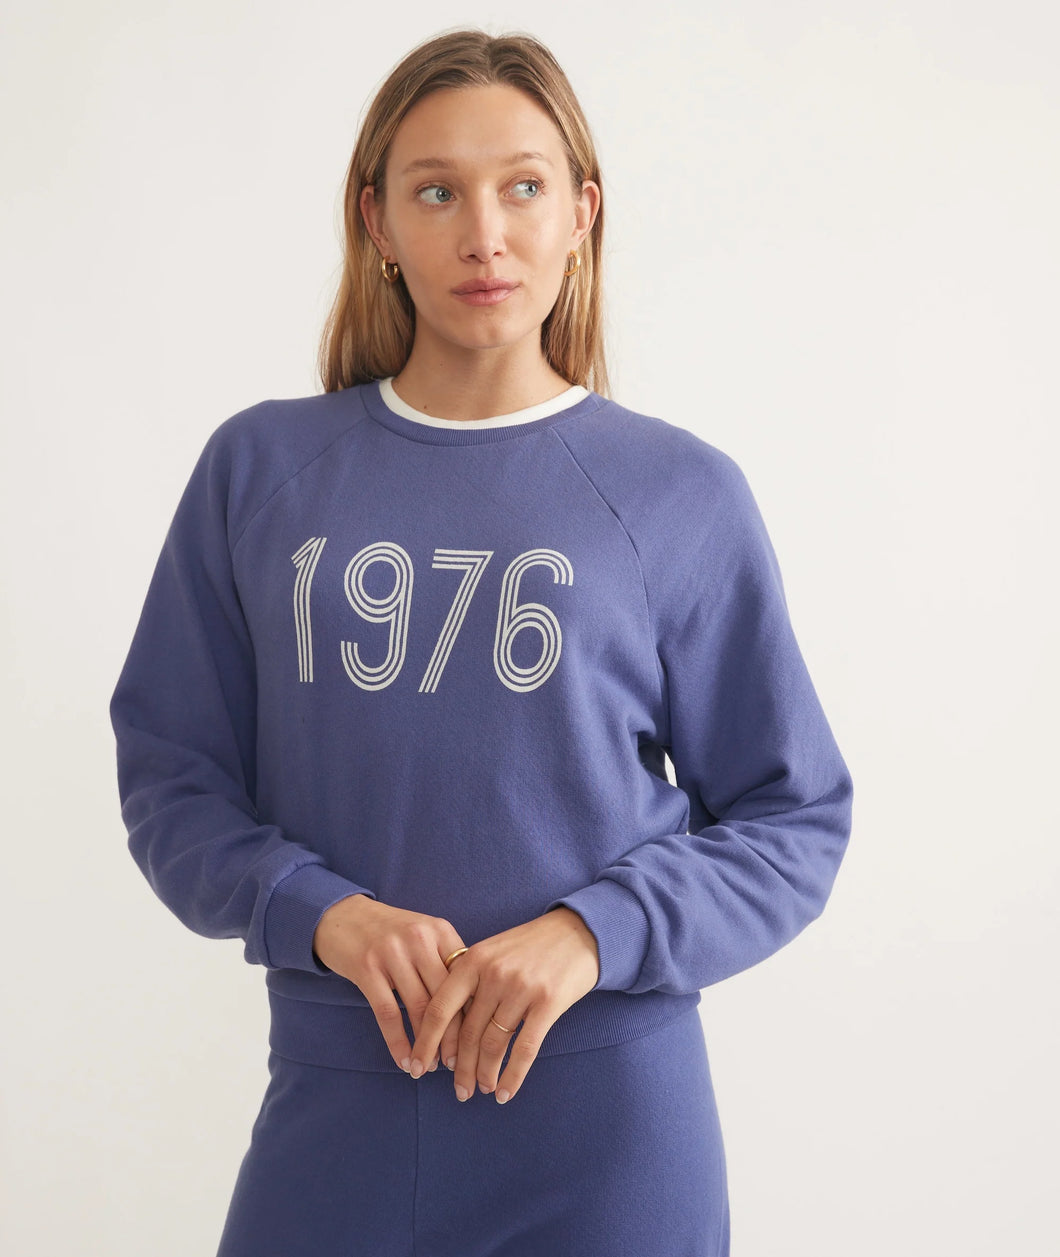 Marine Layer Women's Vintage Terry Graphic Sweatshirt